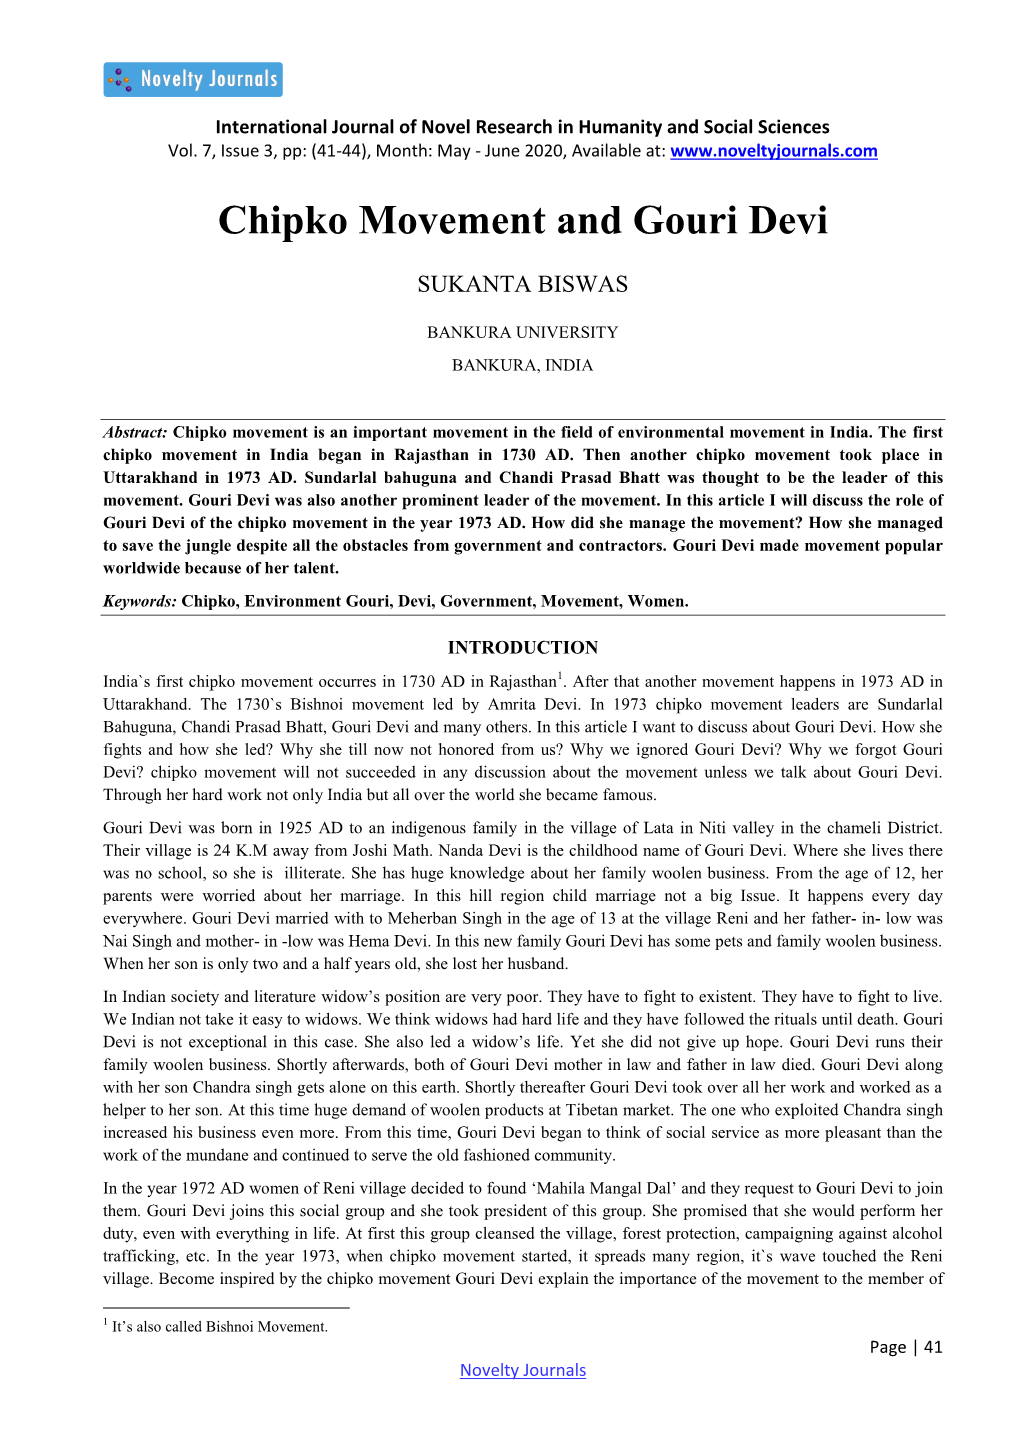 Chipko Movement and Gouri Devi